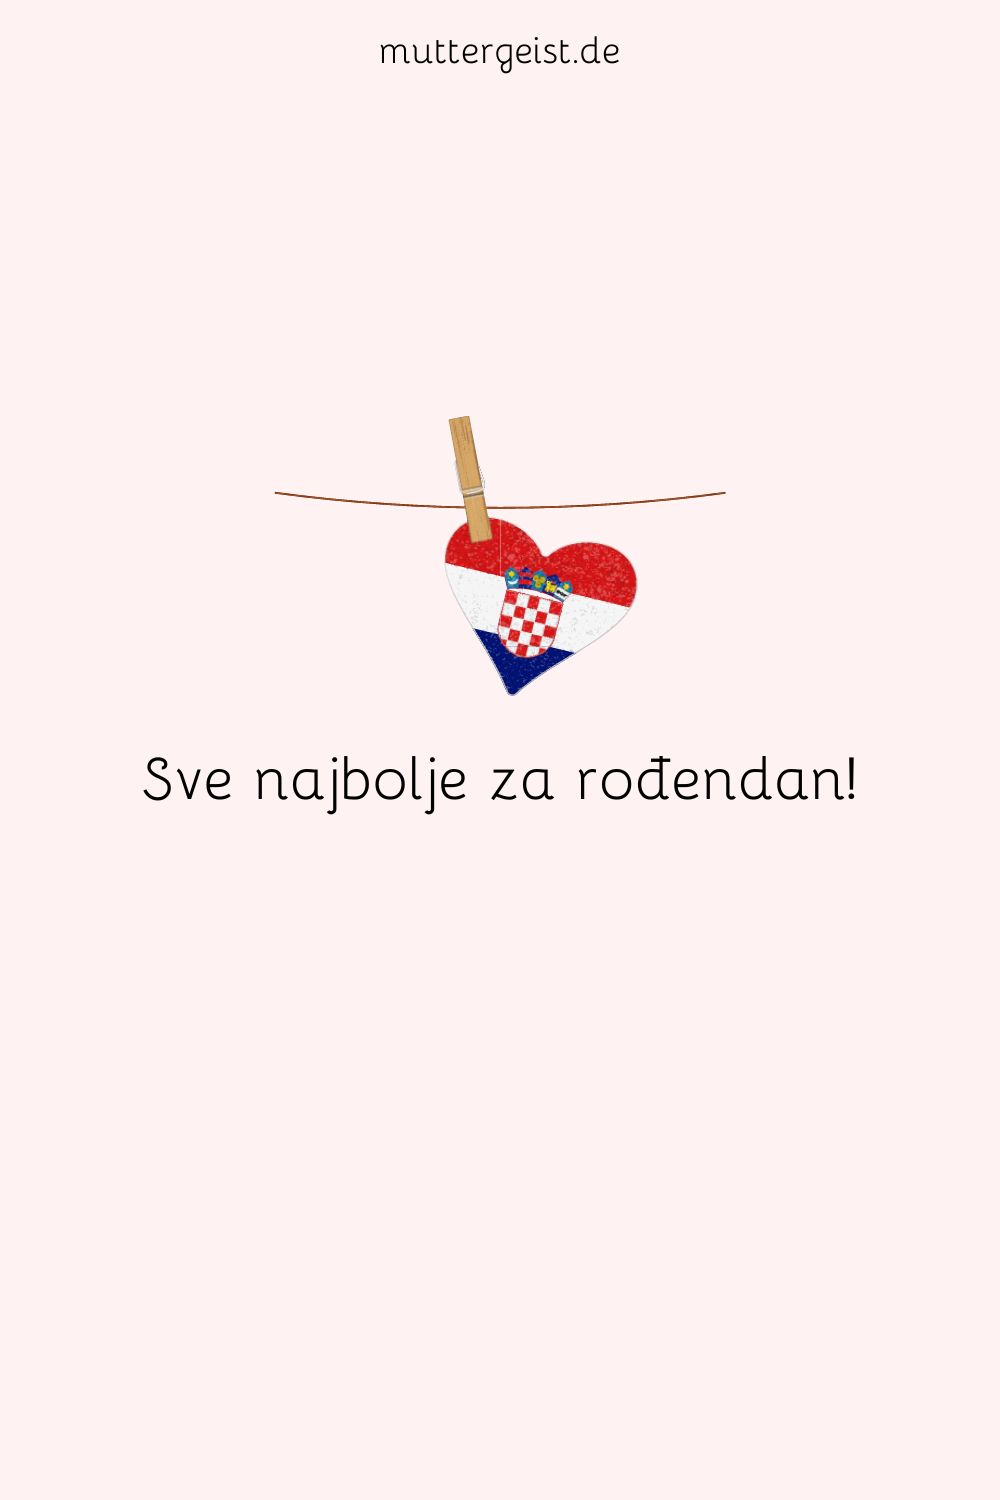 Alles gute zum geburtstag kroatisch 